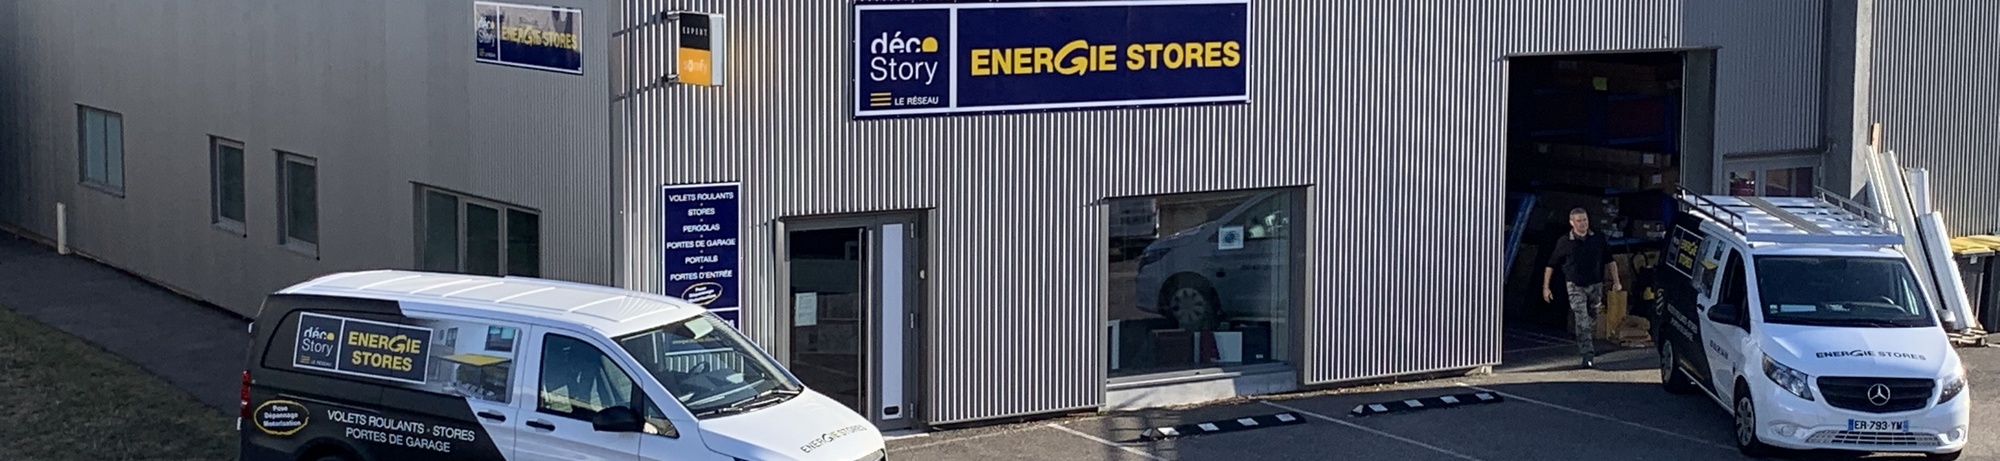 entreprise-energie-stores